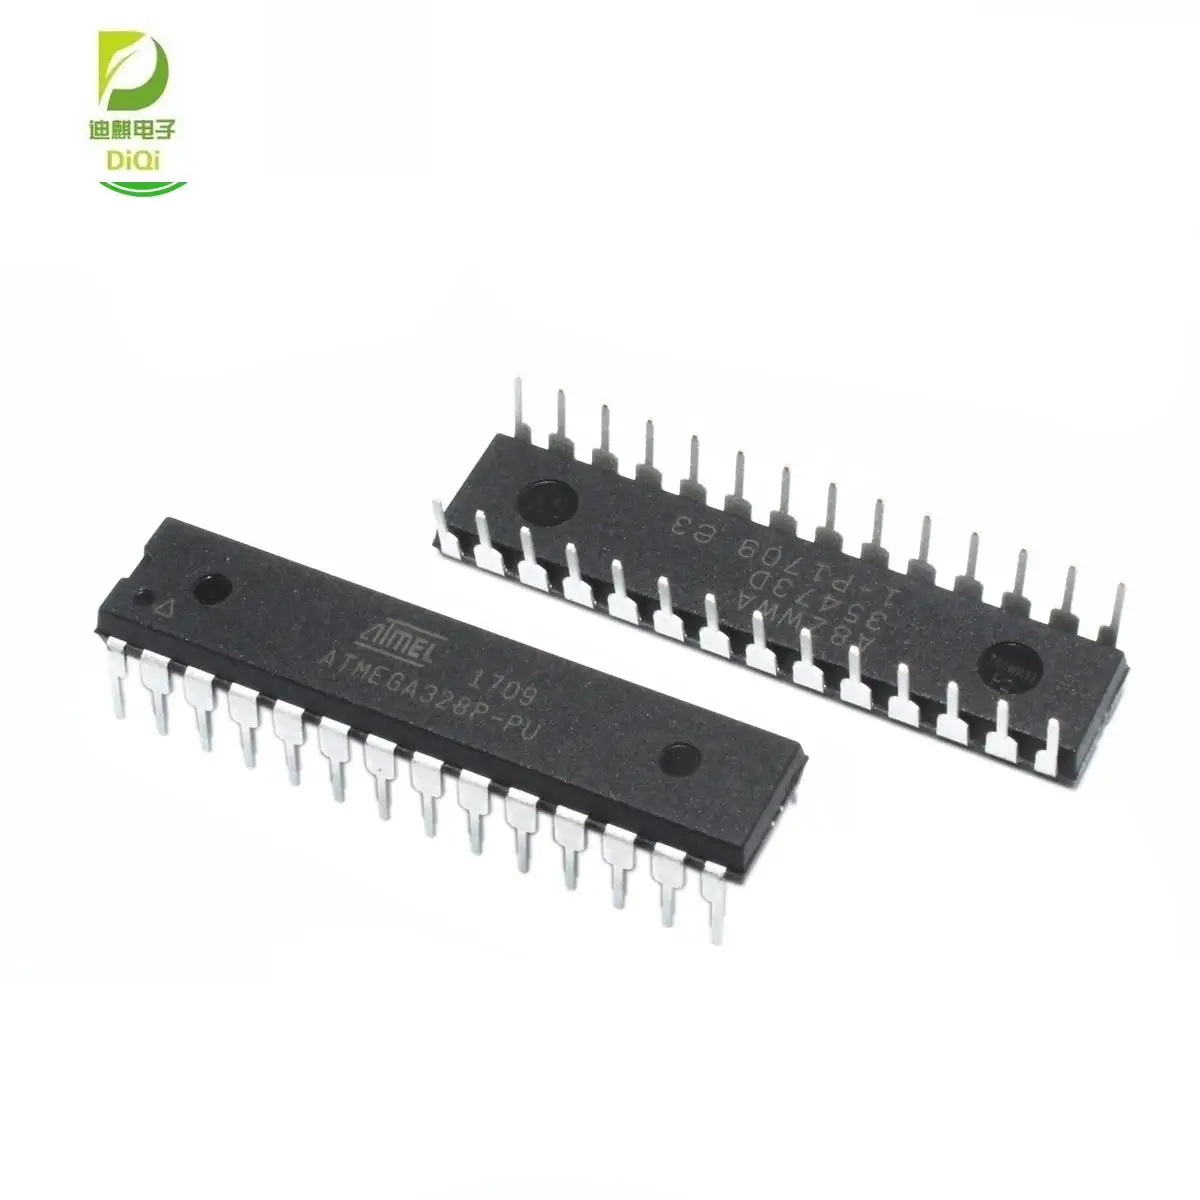 

New 10pcs ATMEGA328P-PU ATMEGA328 Microcontroller DIP28